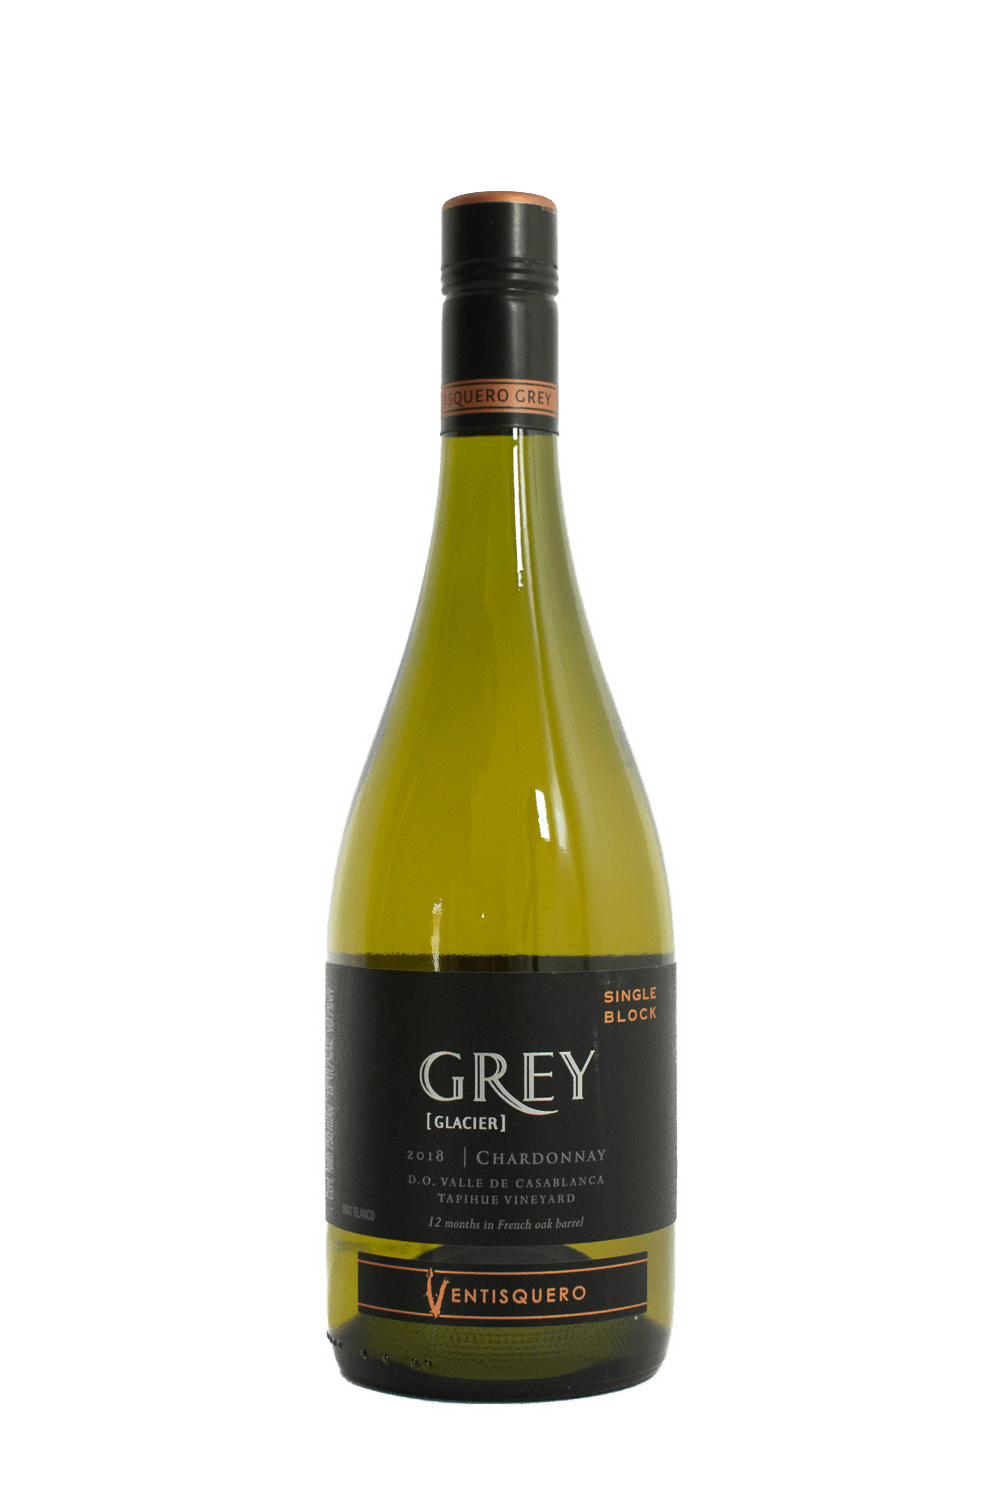 Ventisquero Grey - Chardonnay 2018 - The Blend Wines